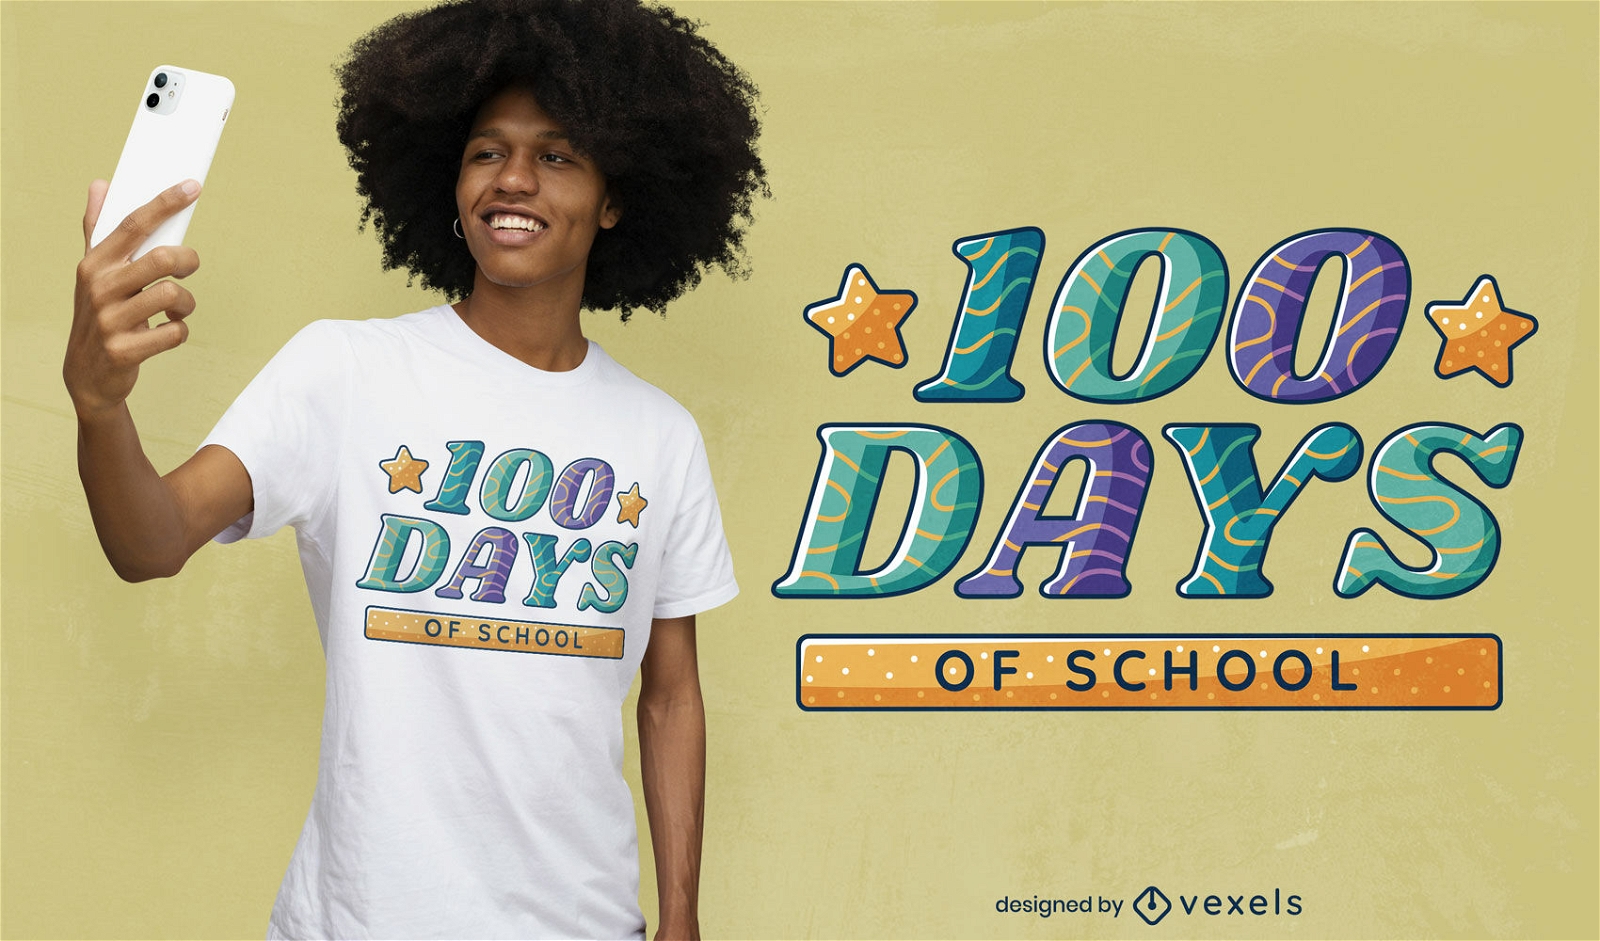 100 school days quote t-shirt design